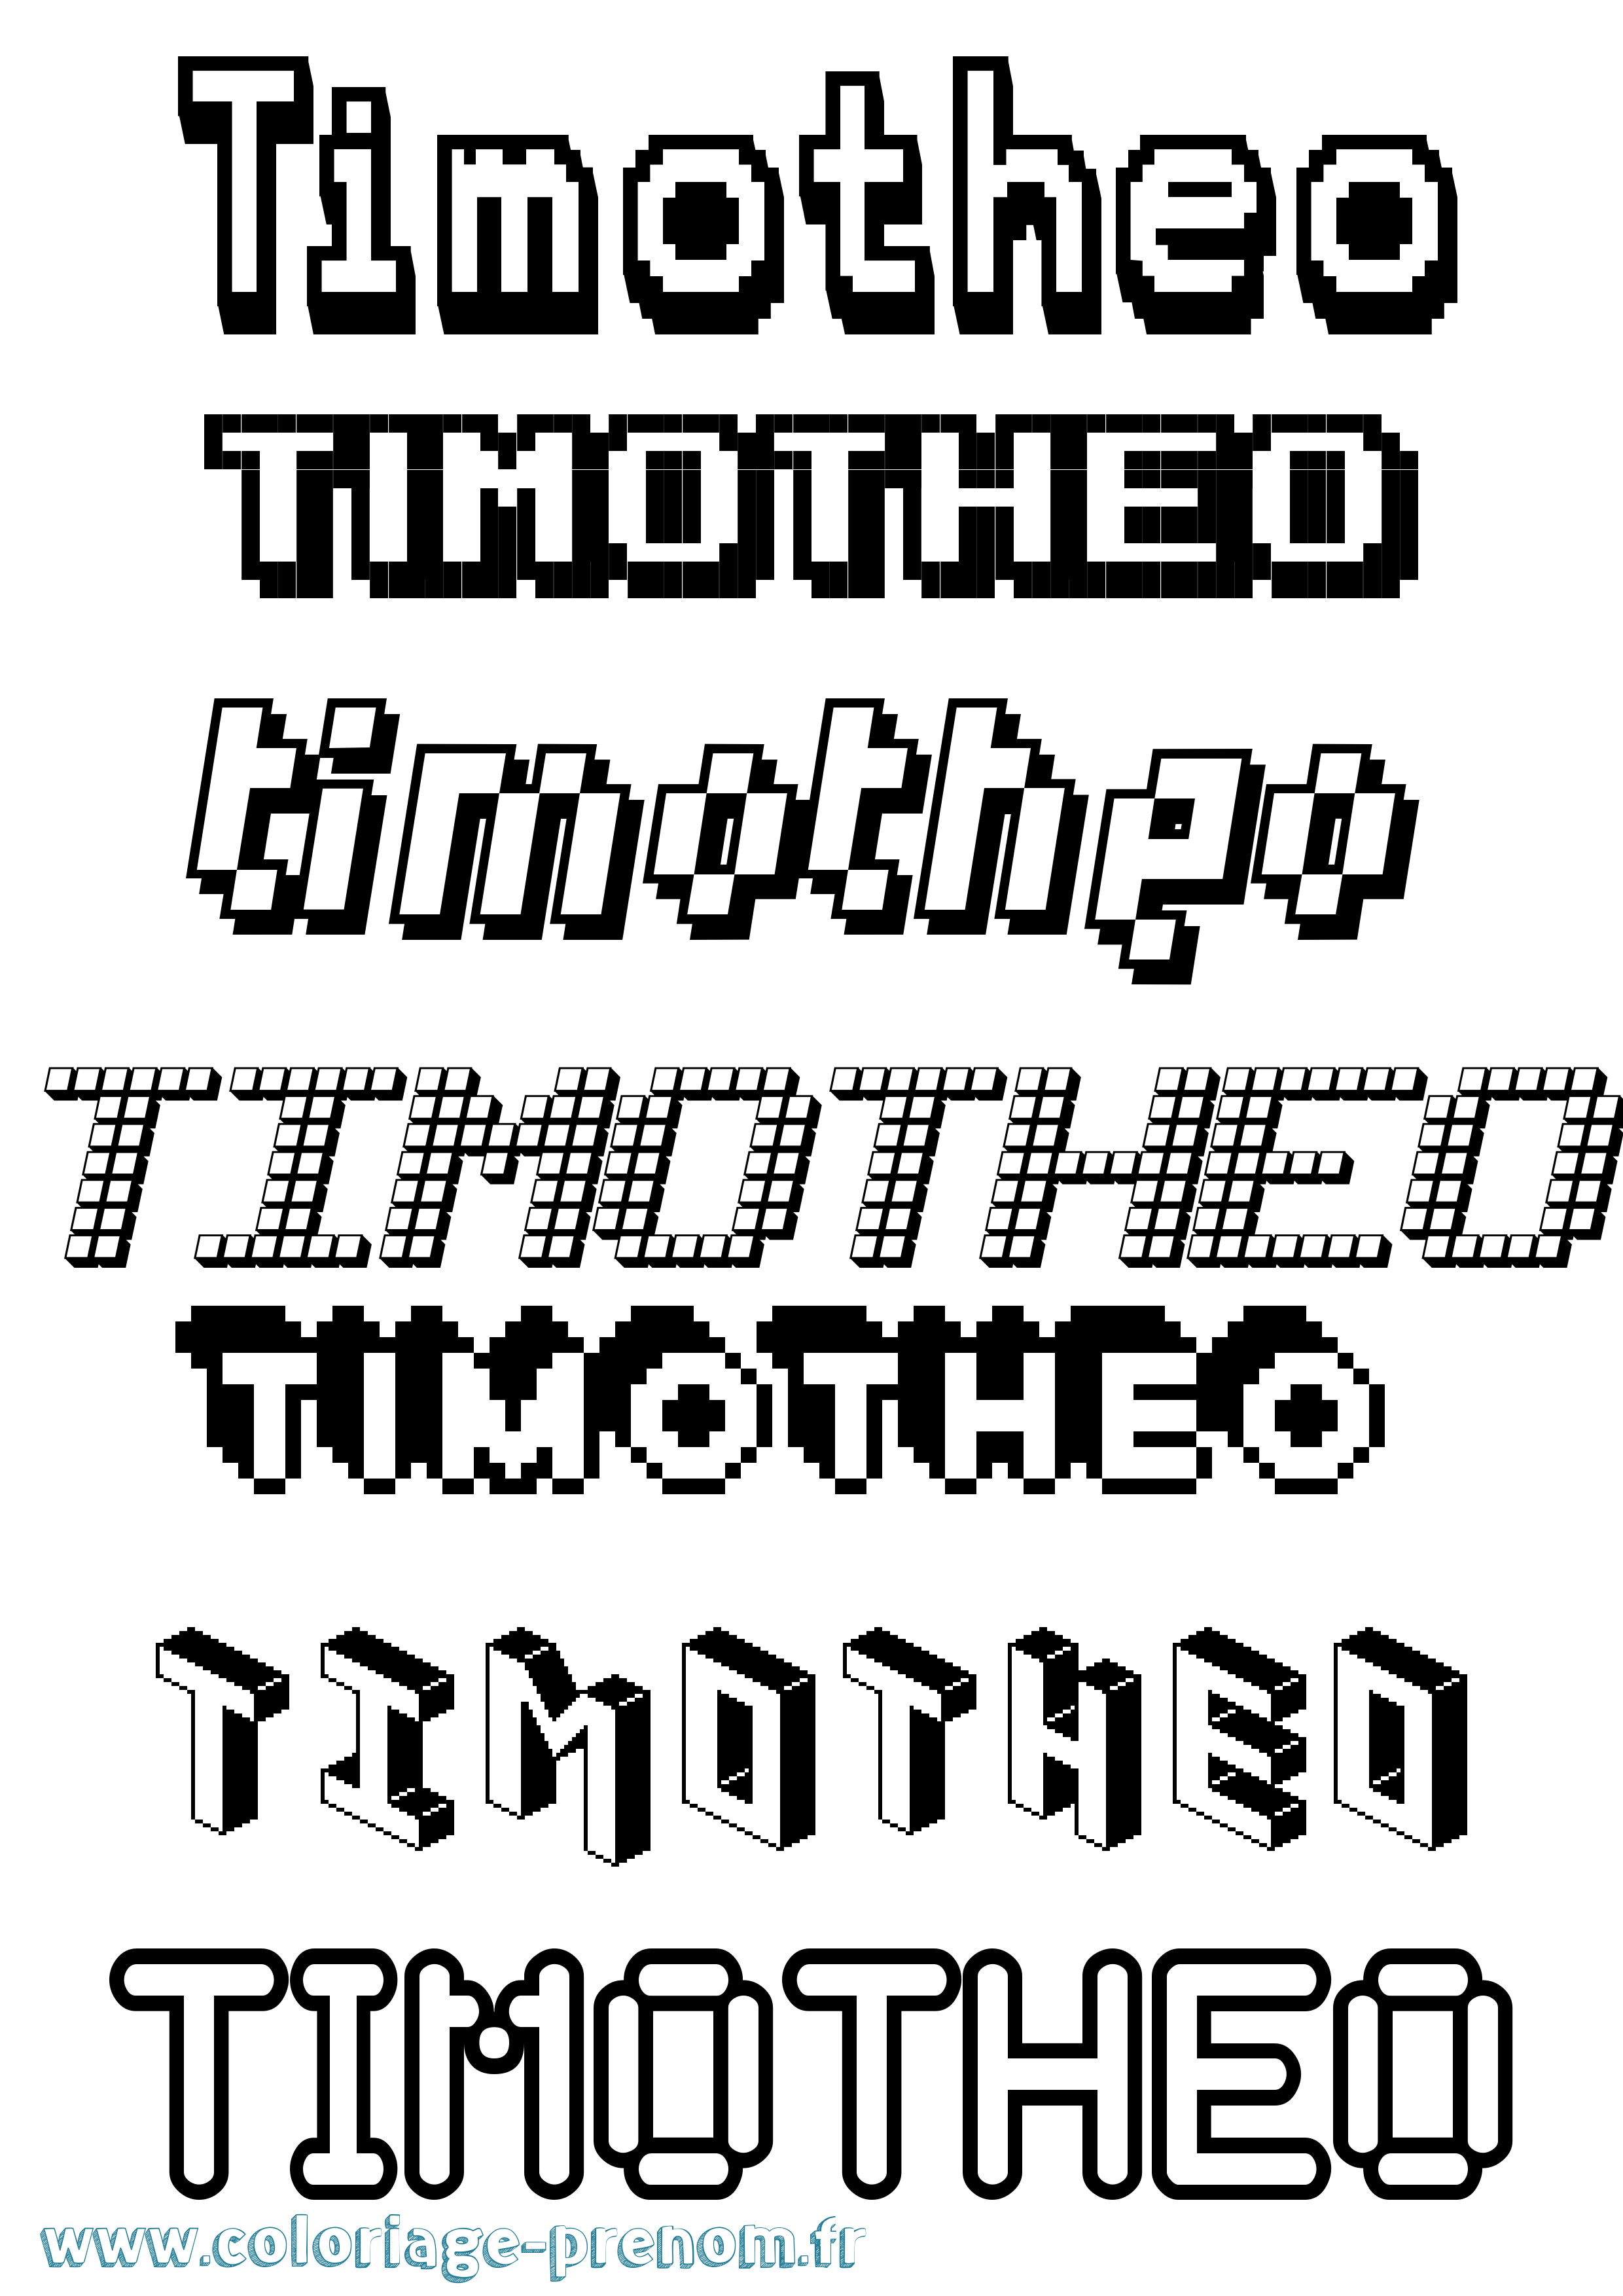 Coloriage prénom Timotheo Pixel